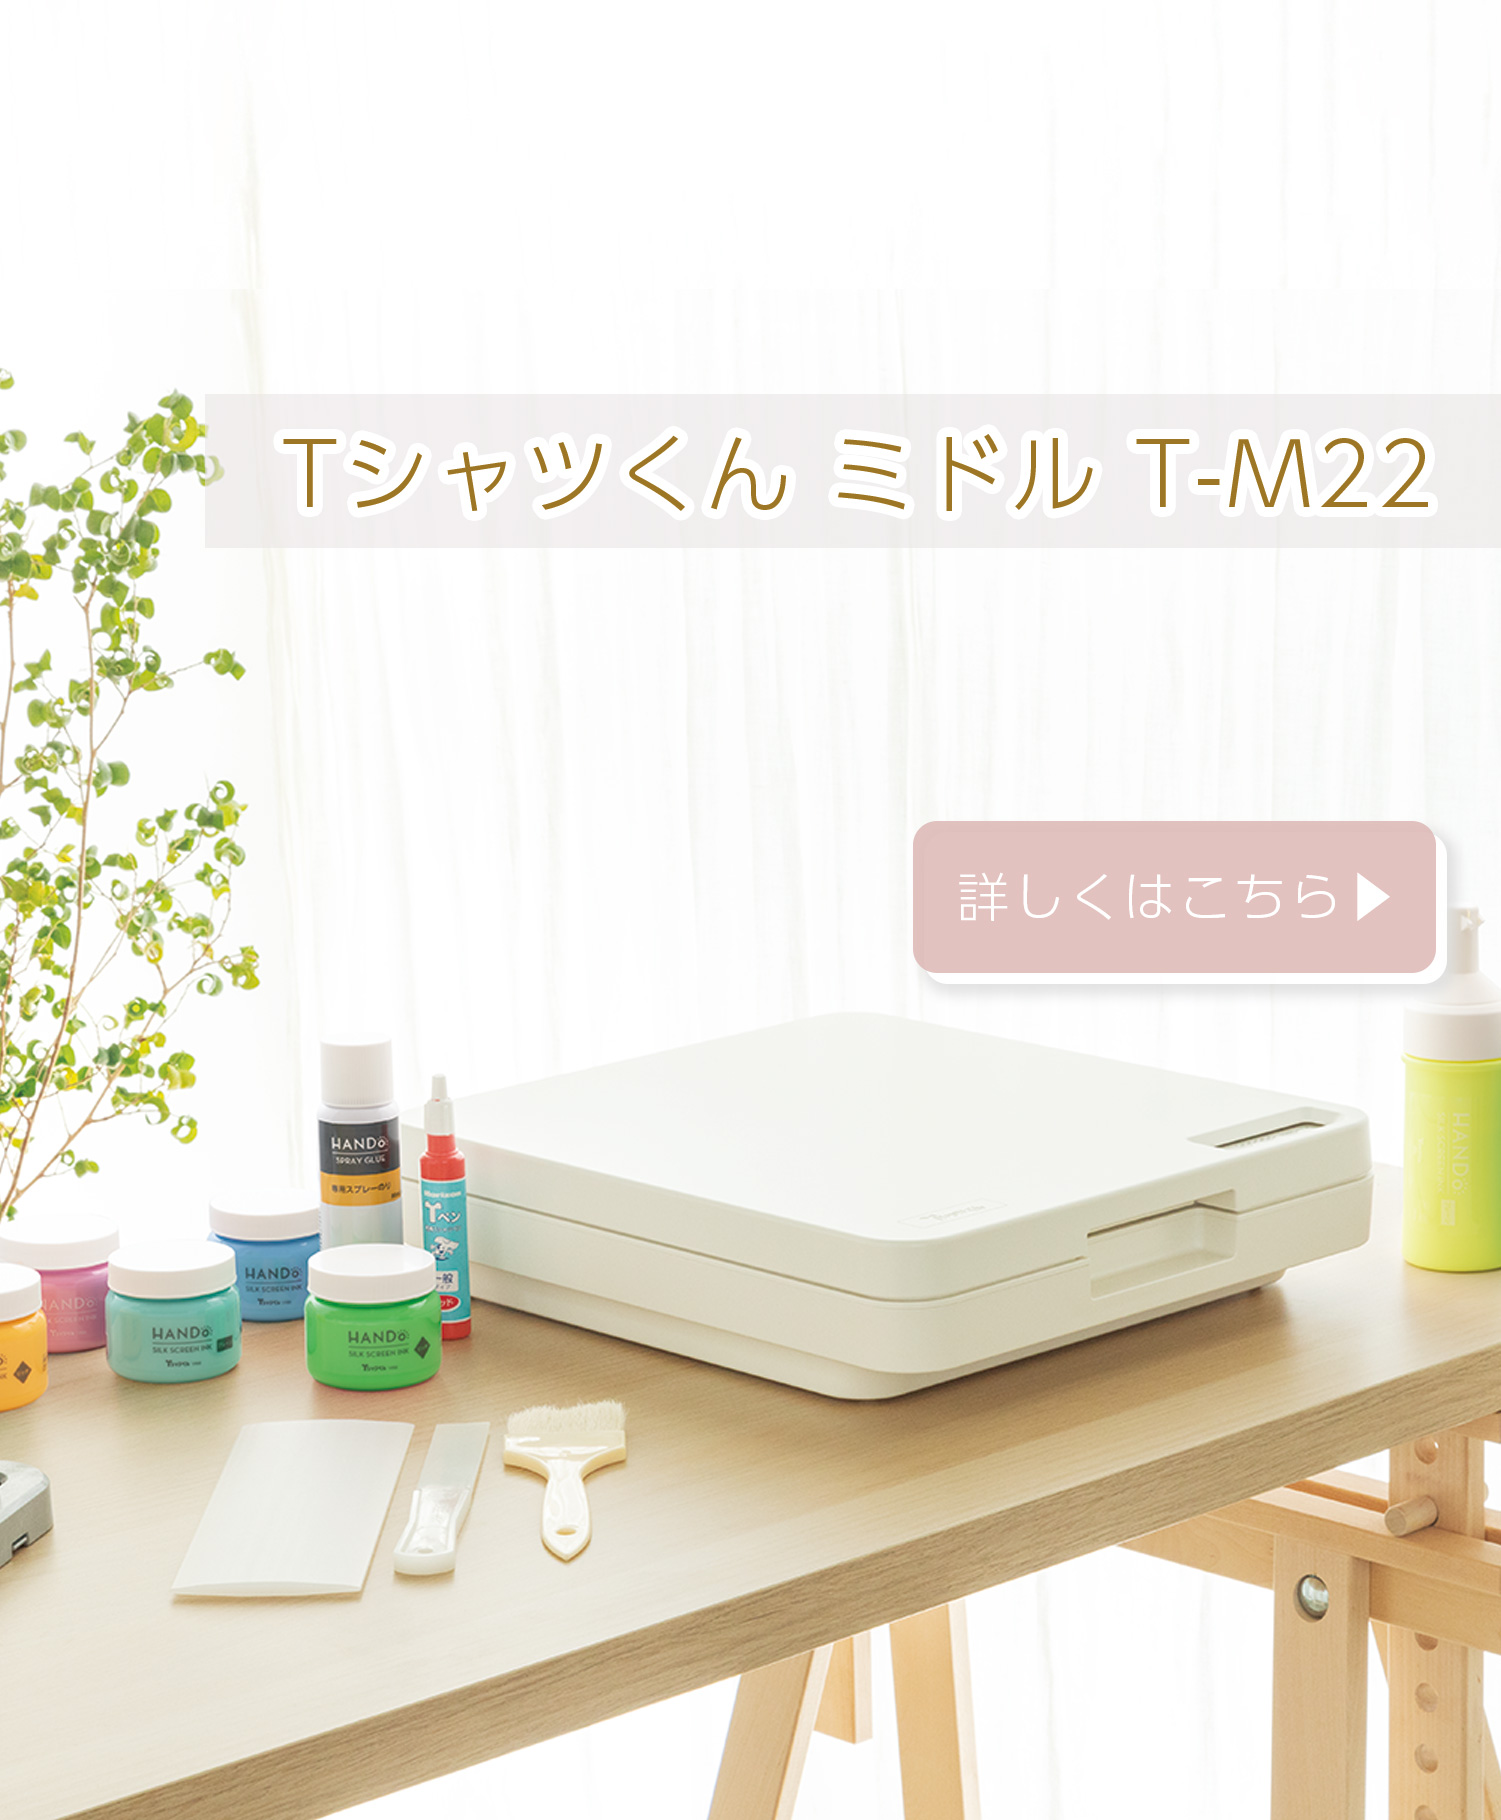 HANDo WEBSHOP: 【公式】Tシャツくん＆ヒートプレス機